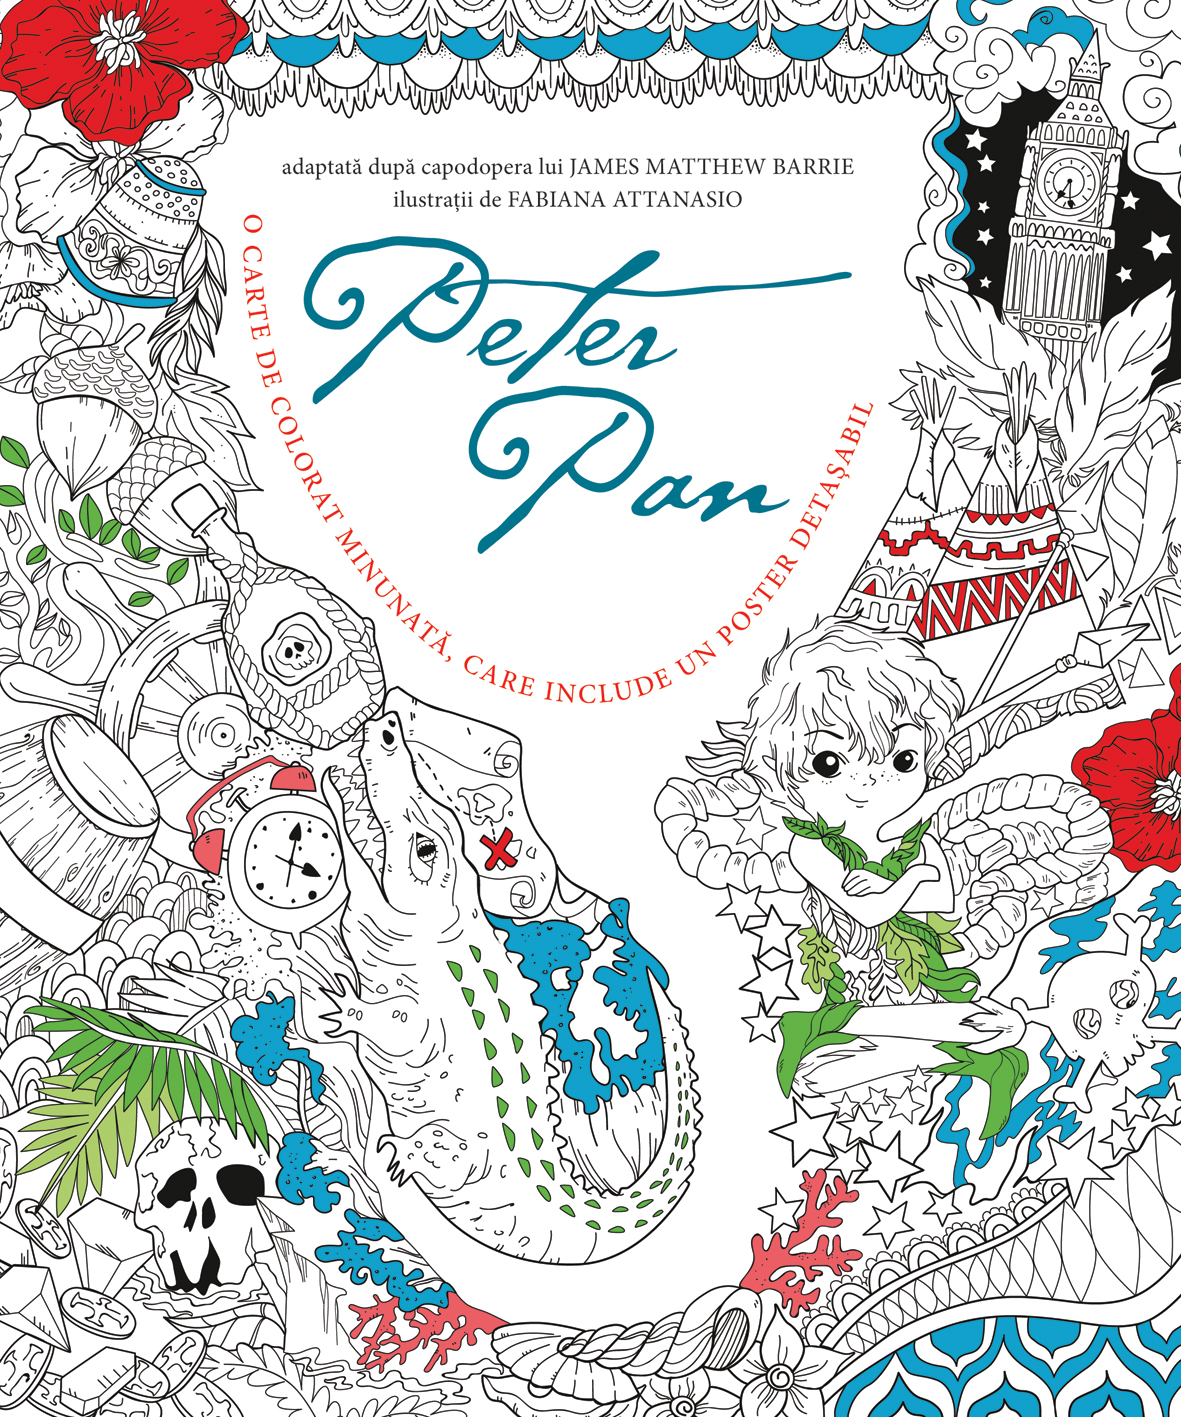 Peter Pan - Carte de colorat